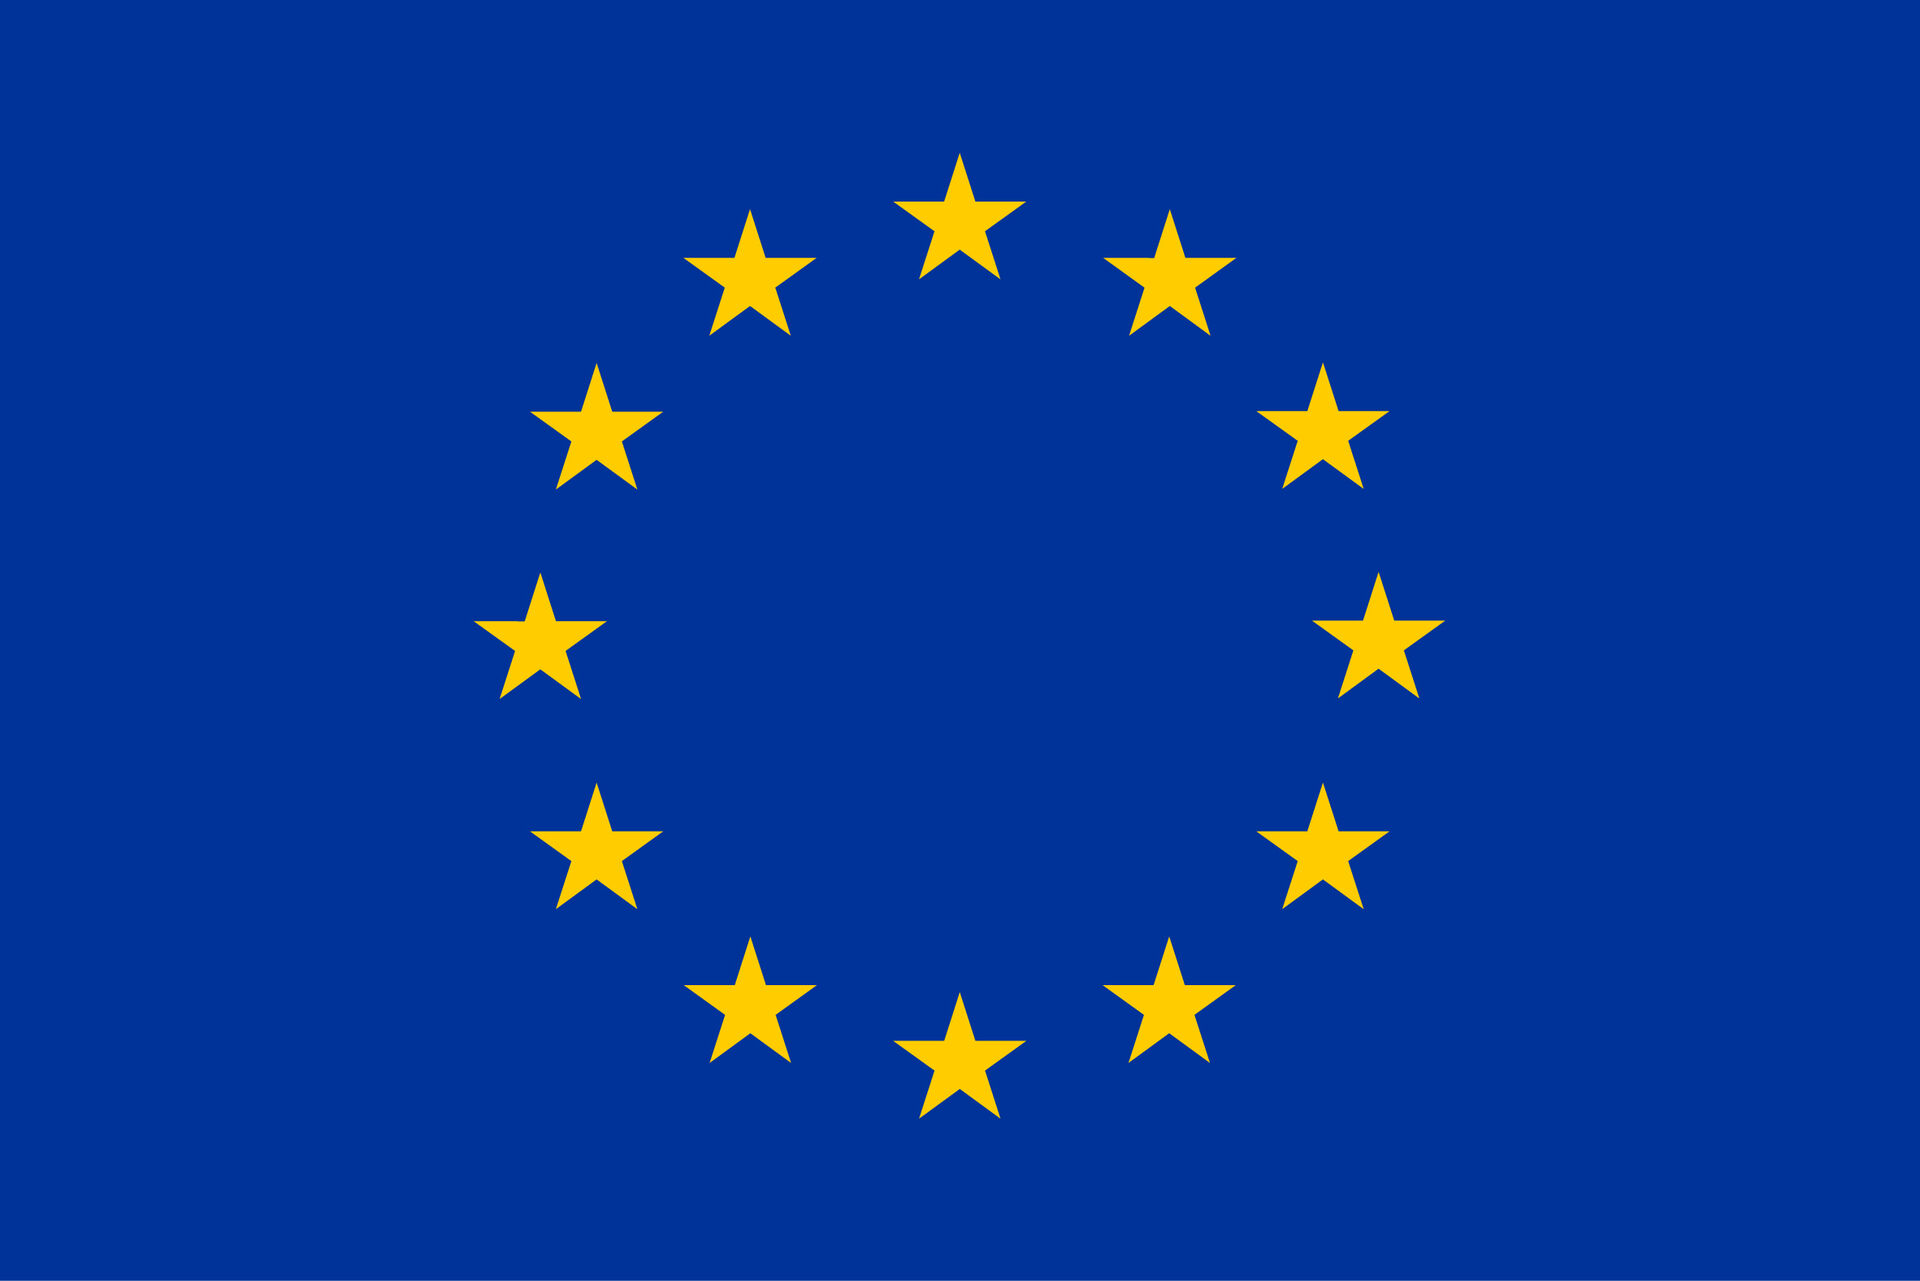 The EU-flag. 12 stars on a blue blackground.